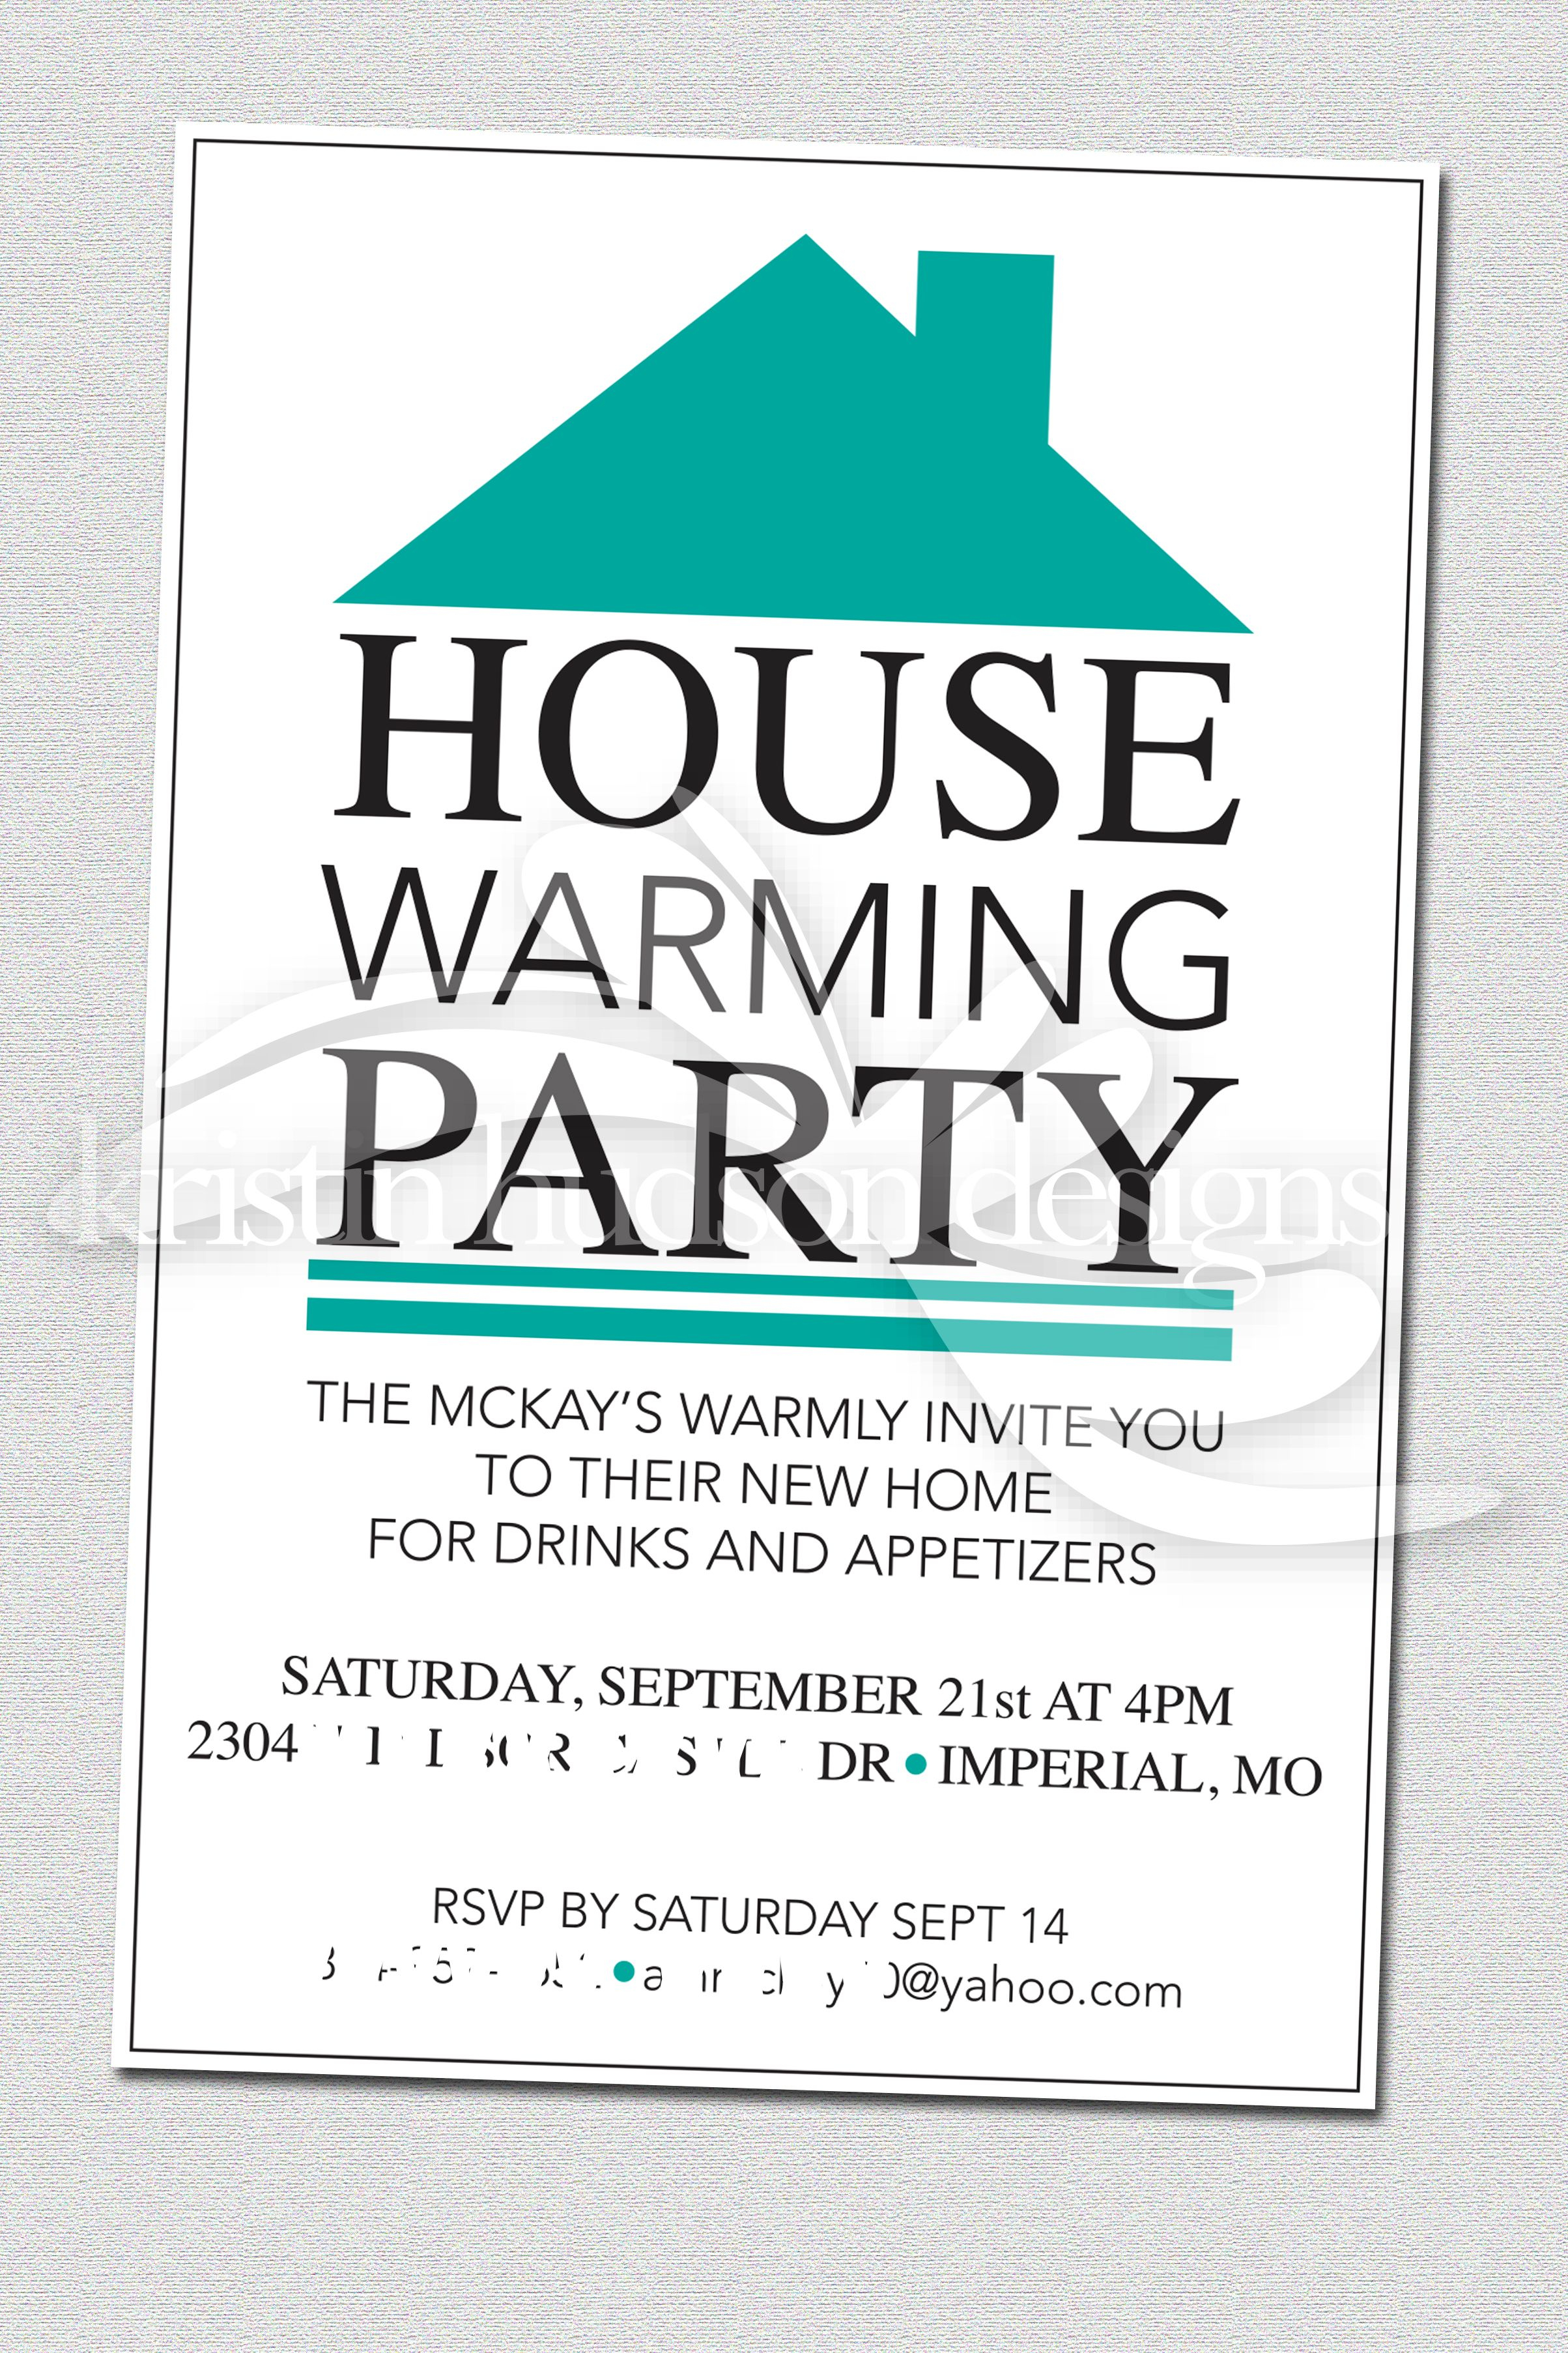 House Warming Party Invite Designs Kristin Hudson Invitations inside sizing 2407 X 3611